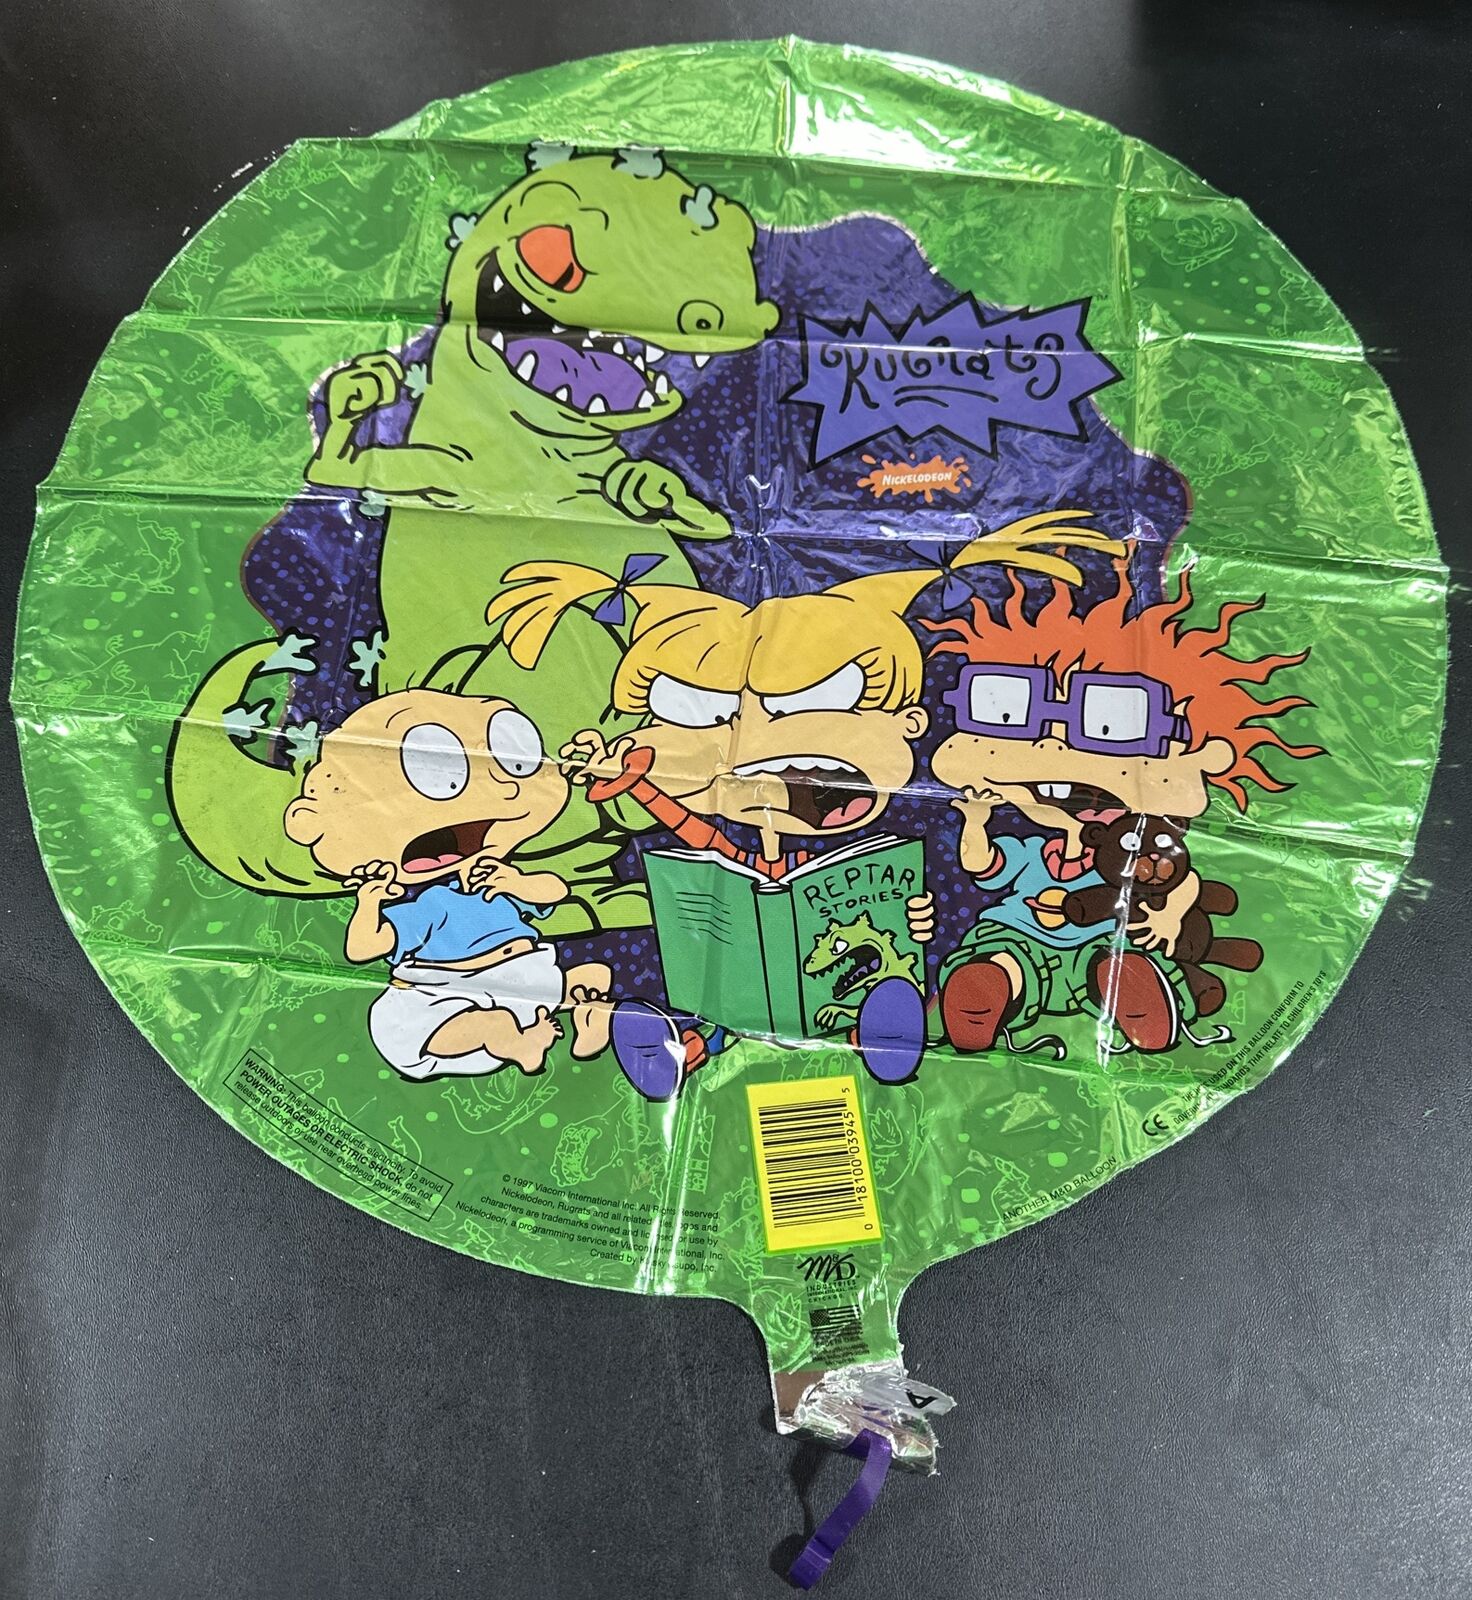 NOS Vintage 1997 Nickelodeon Rugrats Cartoon Reptar Mylar Party Balloon - NEW